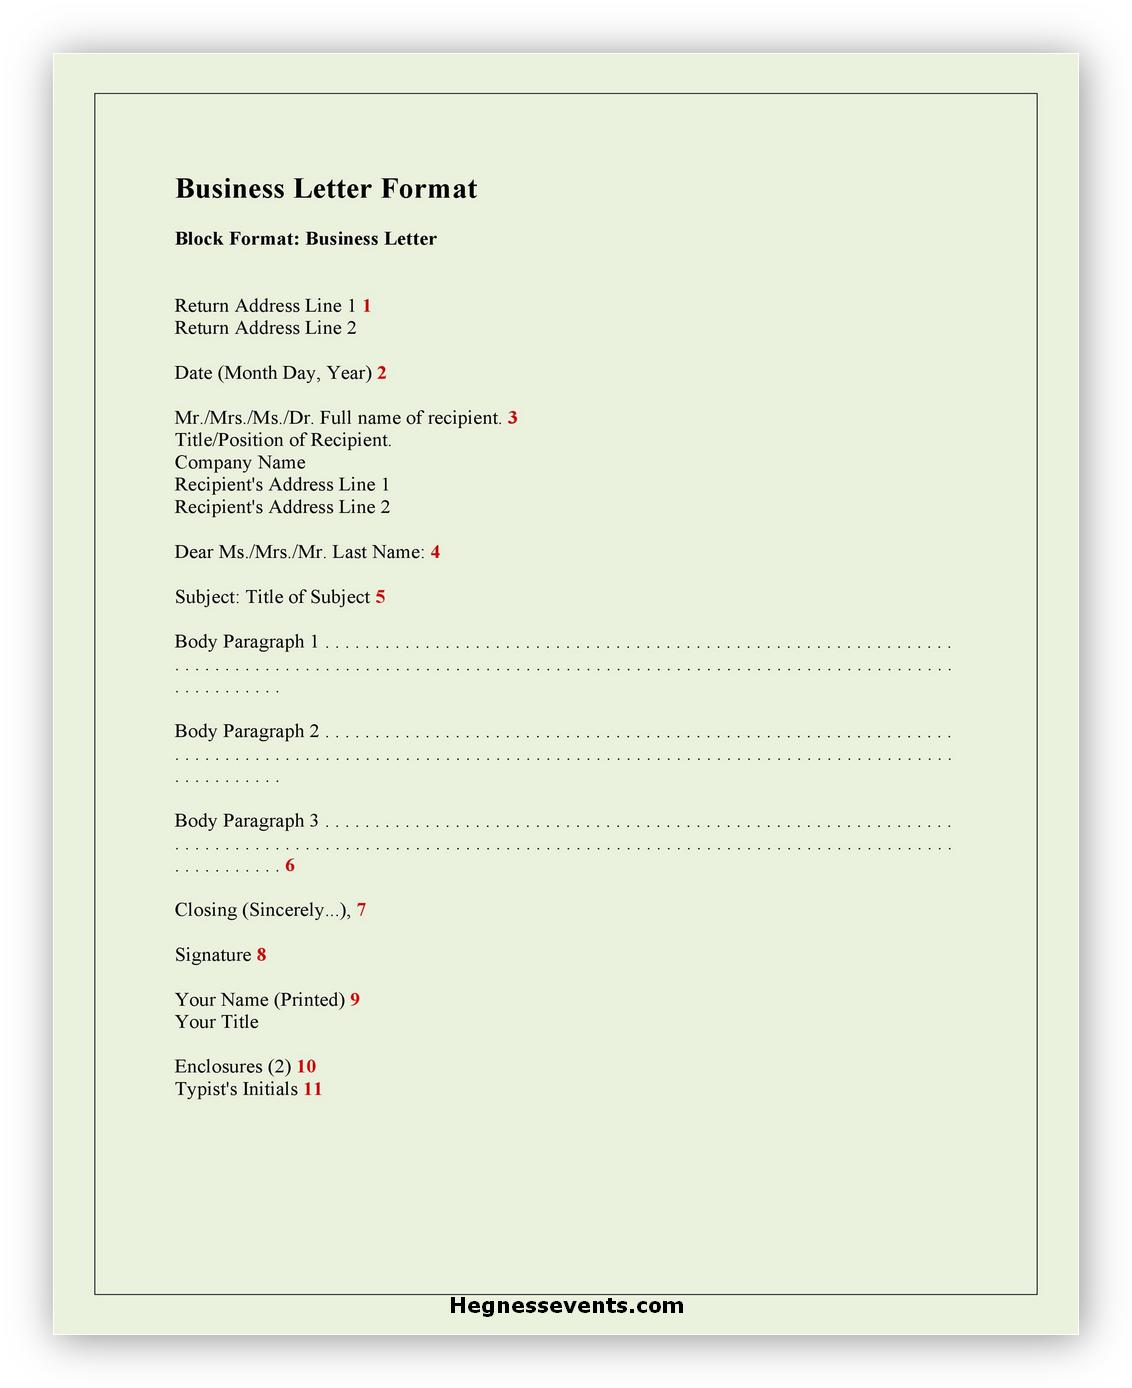 Business letter Format 04